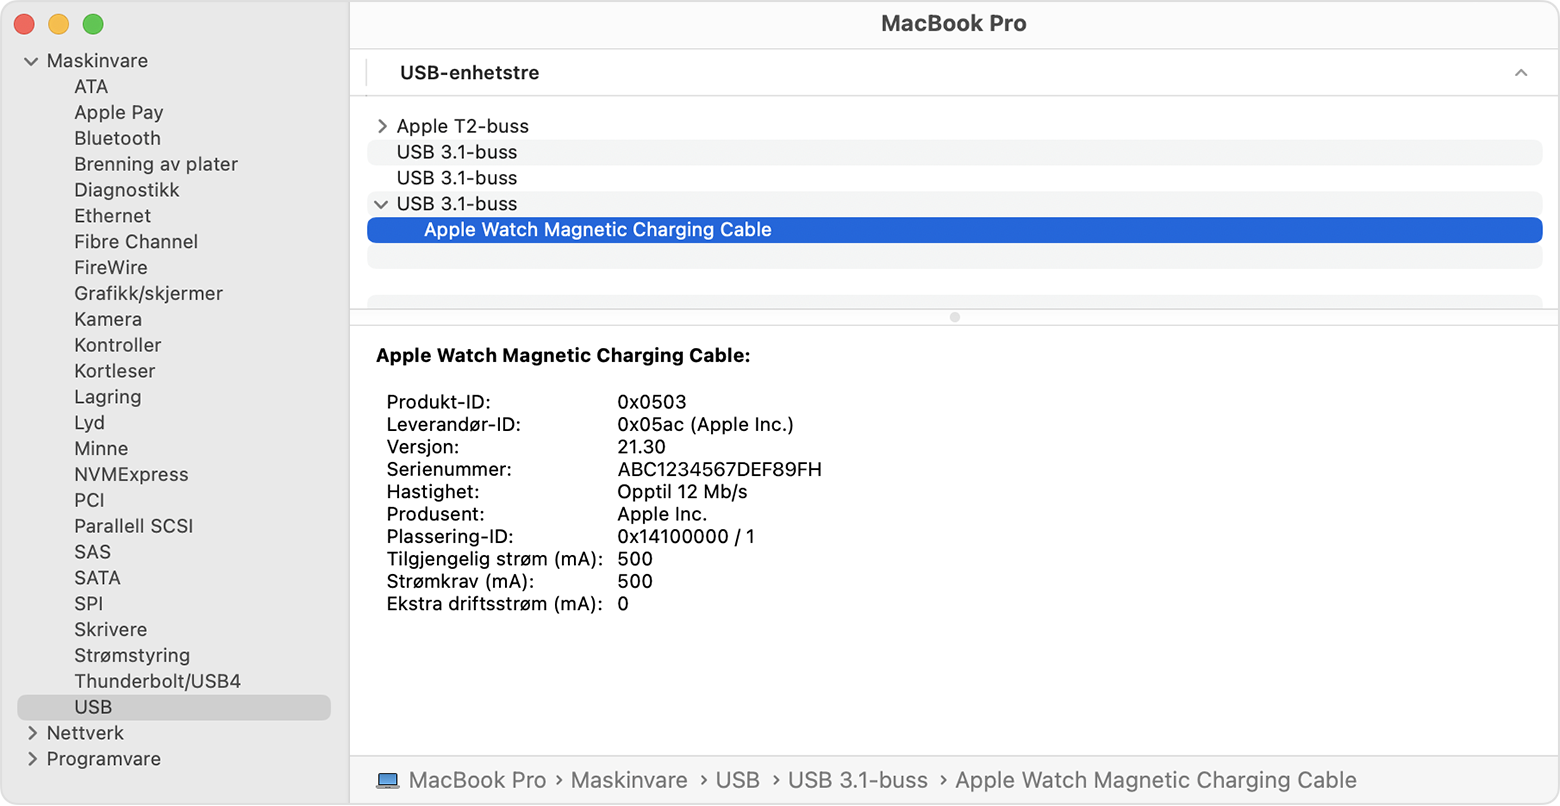 Systemrapport på MacBook Pro som viser produsentinformasjonen for Magnetisk ladekabel til Apple Watch